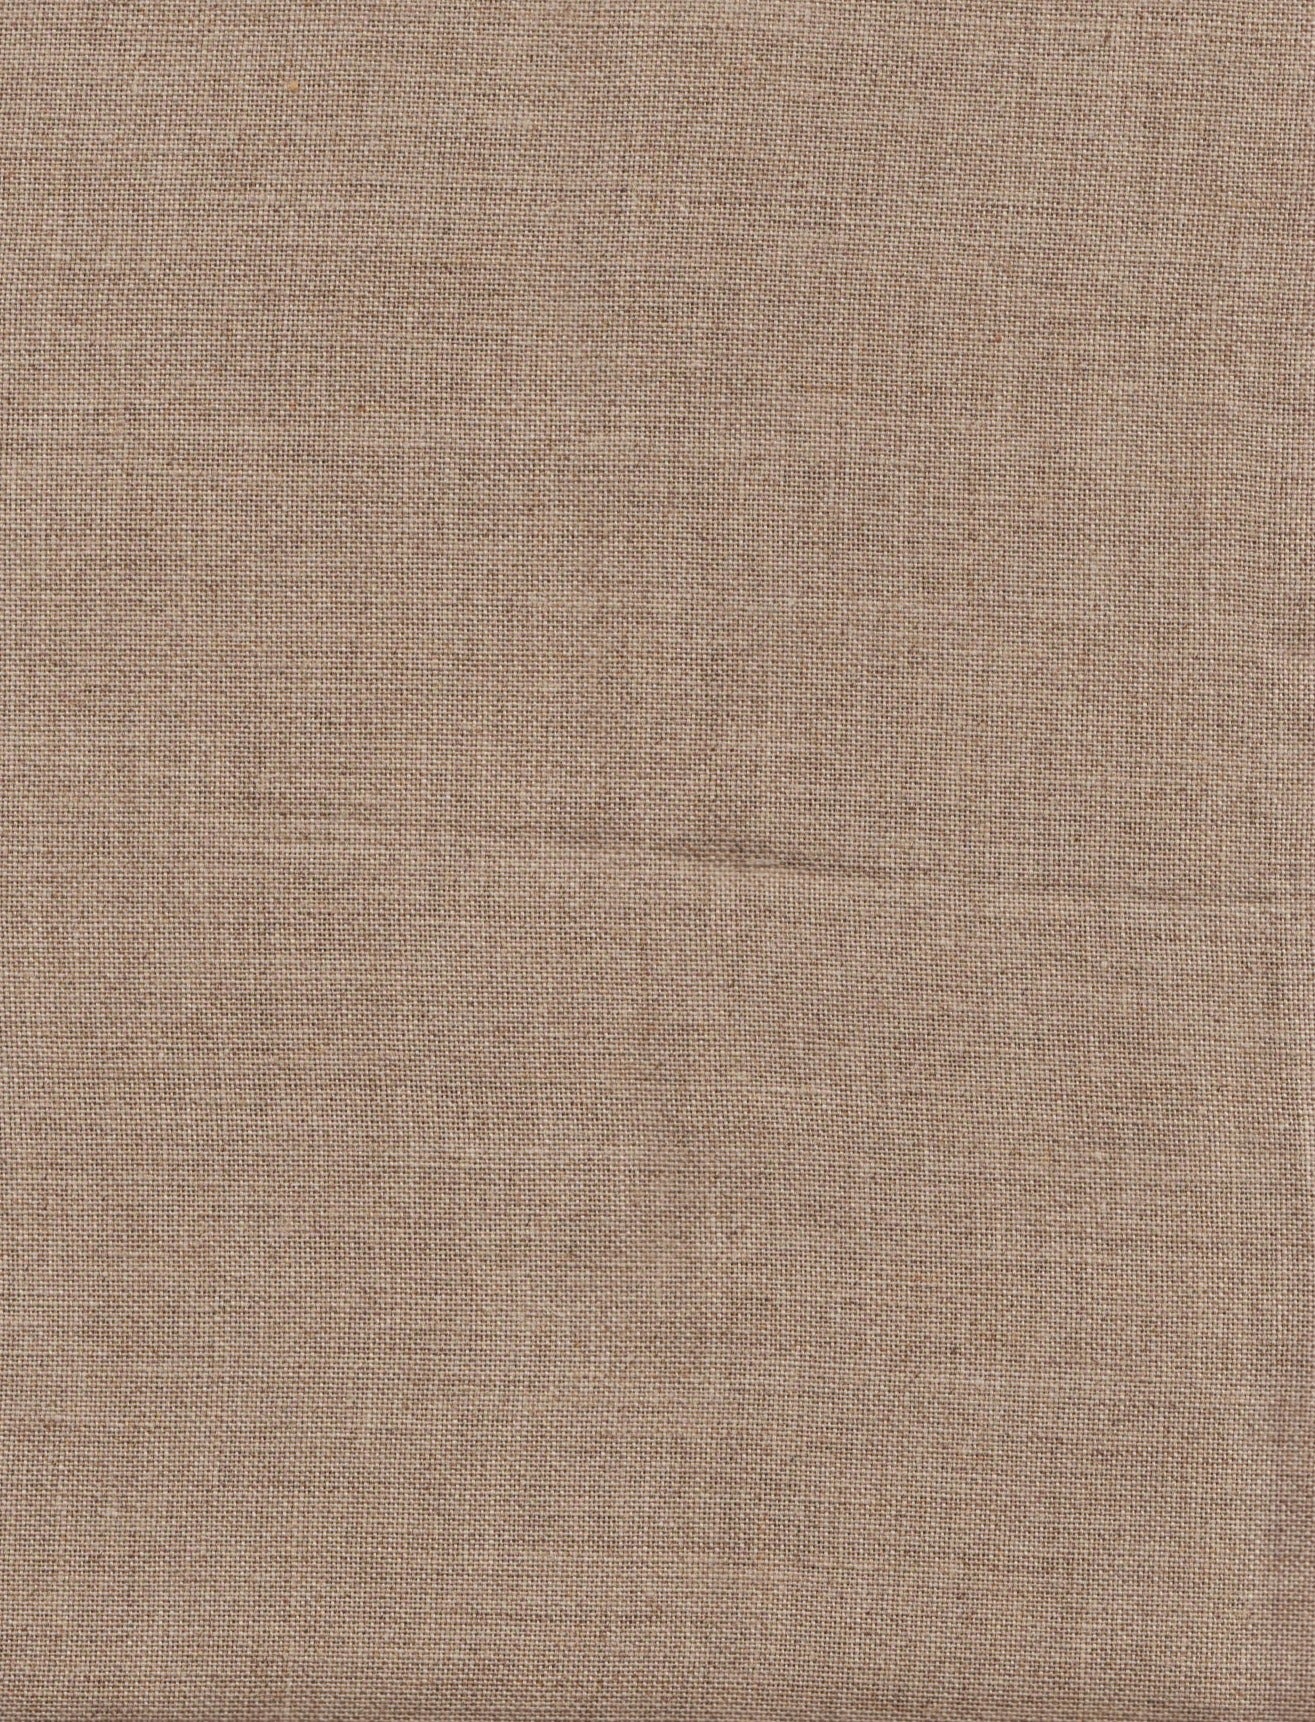 Wichelt Belfast 32ct 14x17 Natural Brown cross stitch Fabric